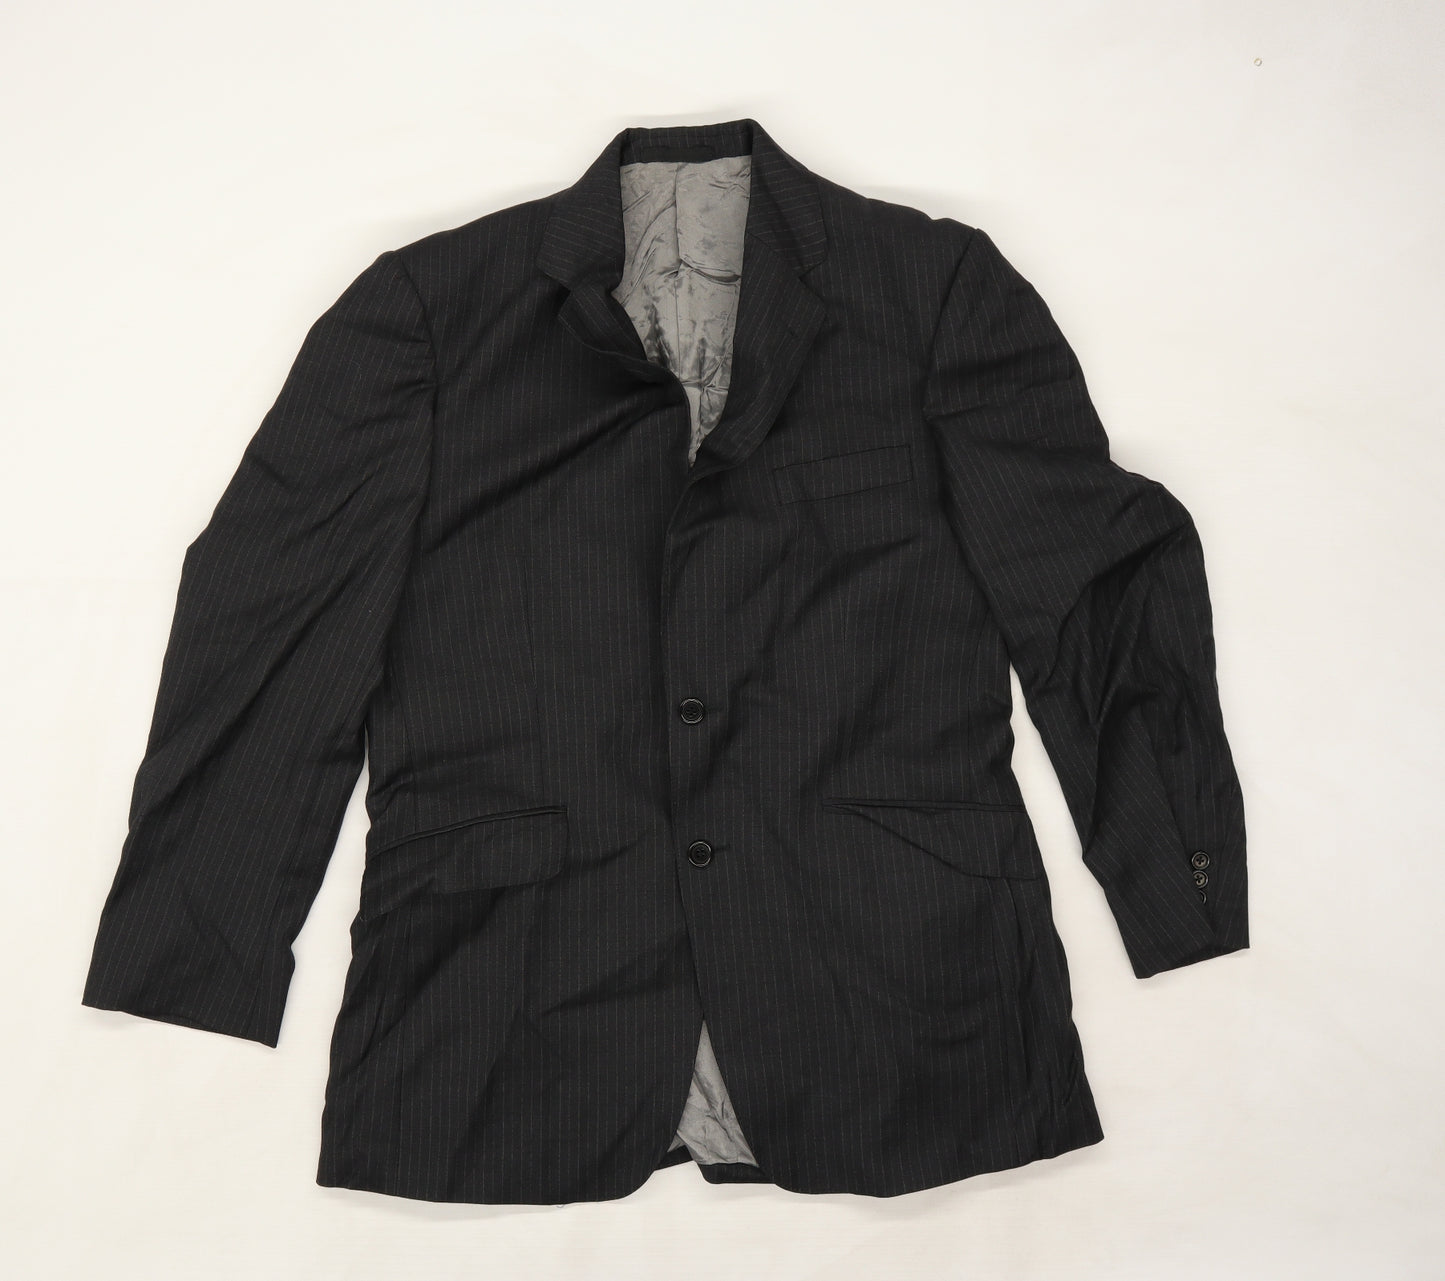 Bridgens Mens Blue Striped Rayon Jacket Suit Jacket Size 40